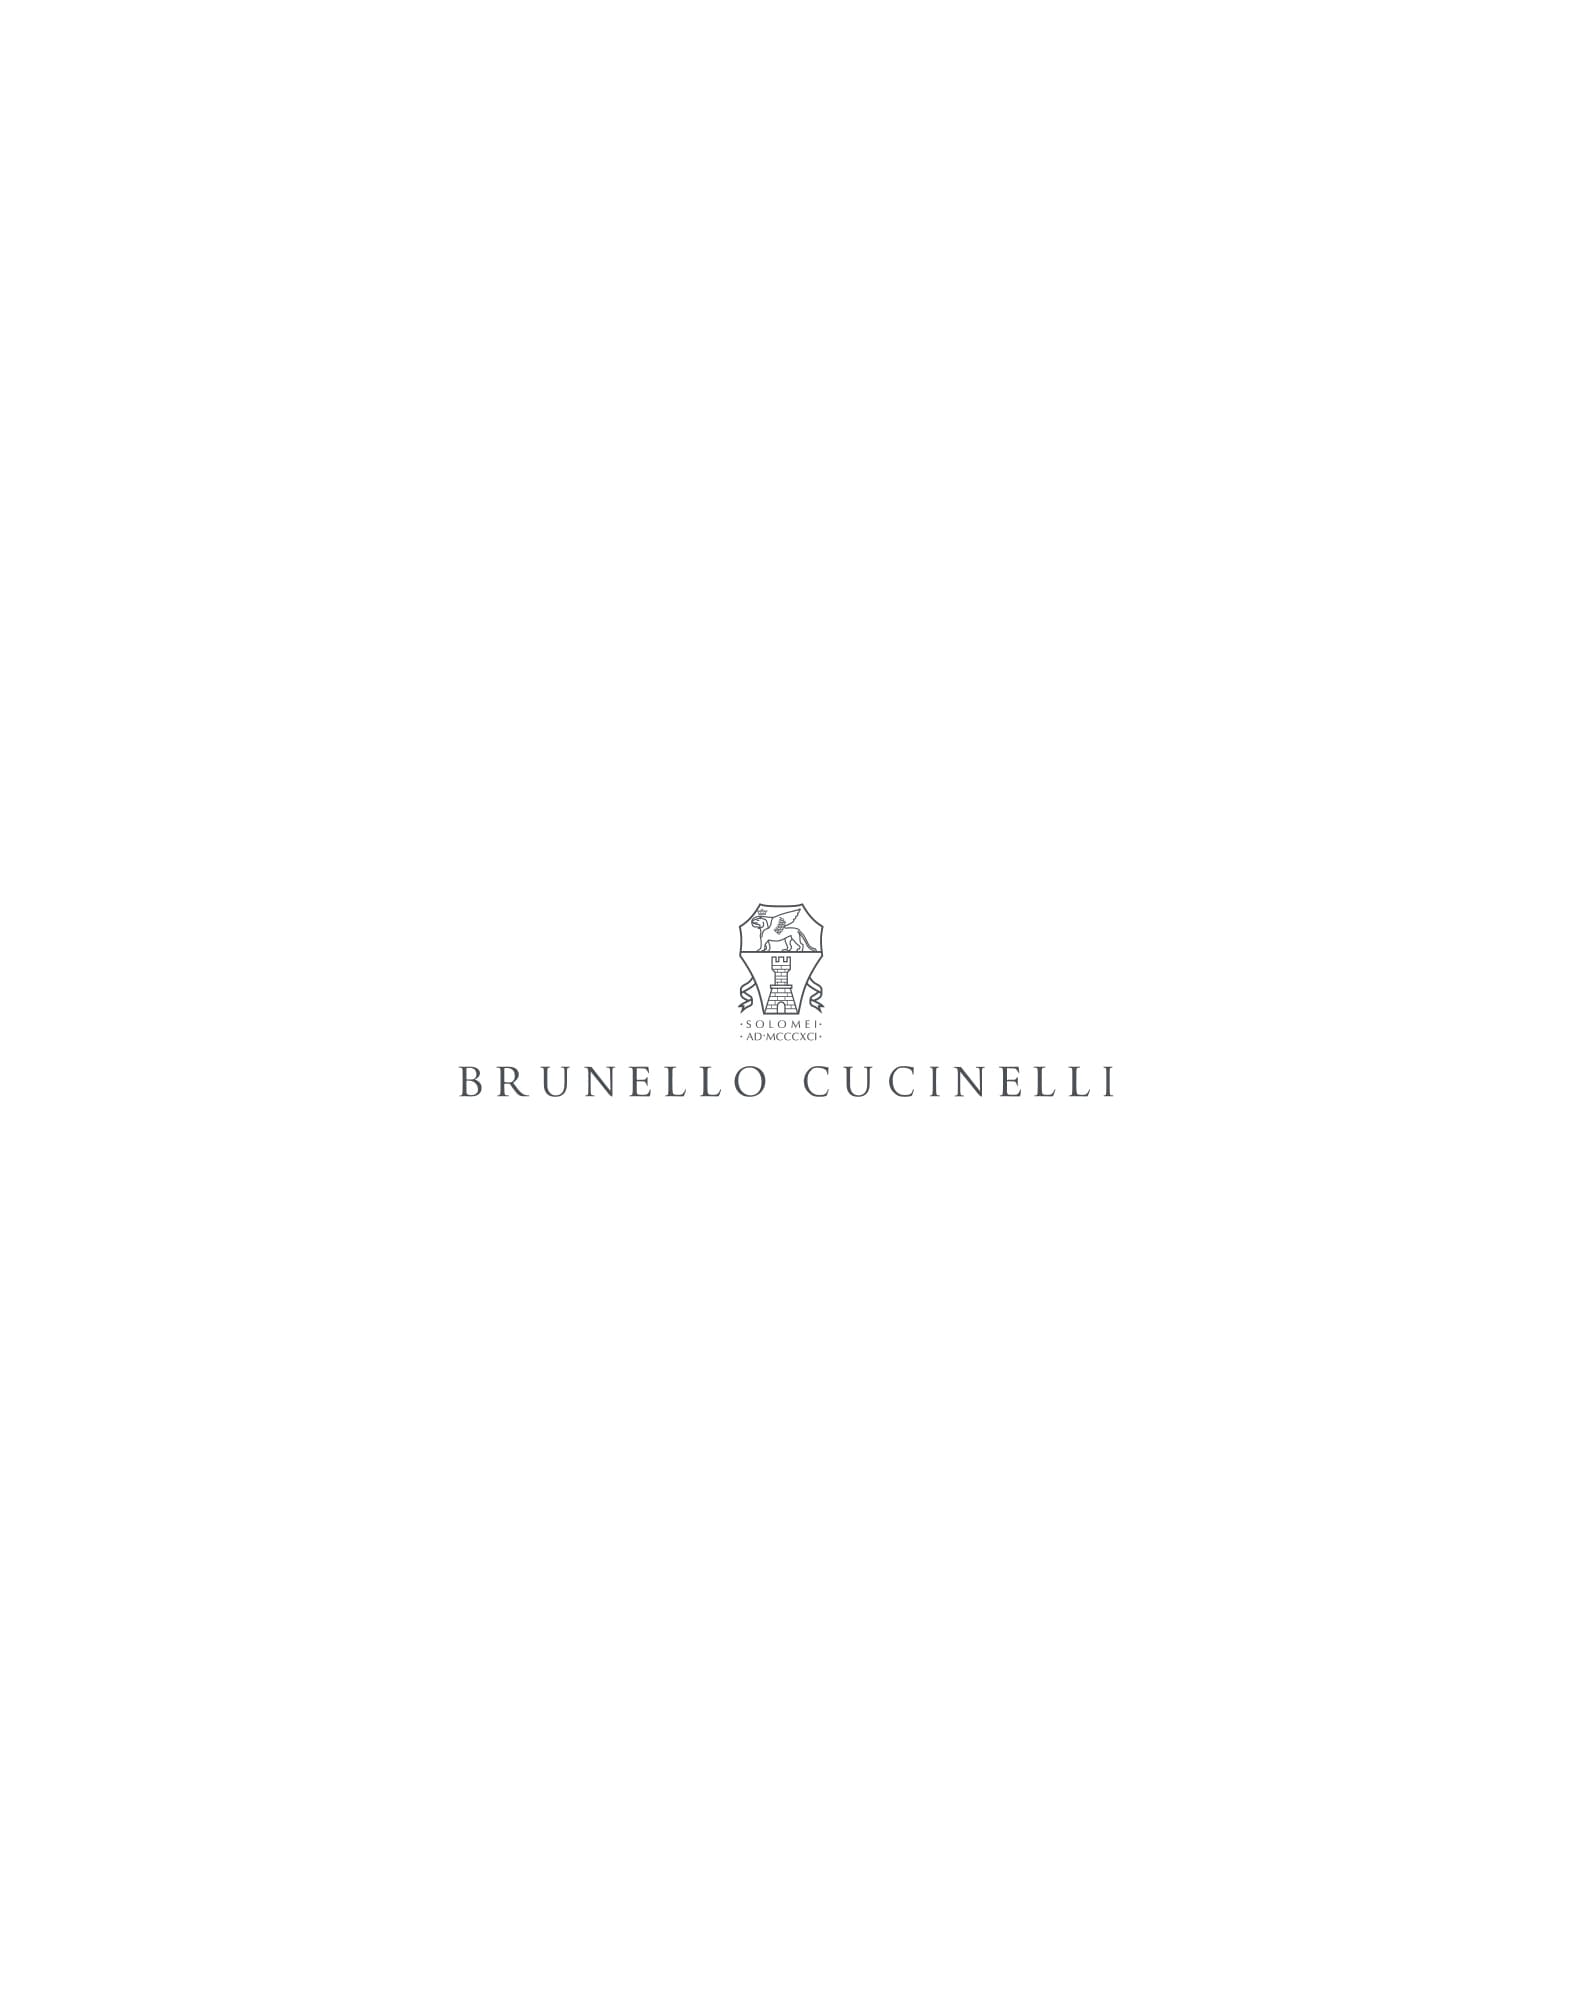 Носки из трикотажа Sparkling Антрацит Женщина - Brunello Cucinelli